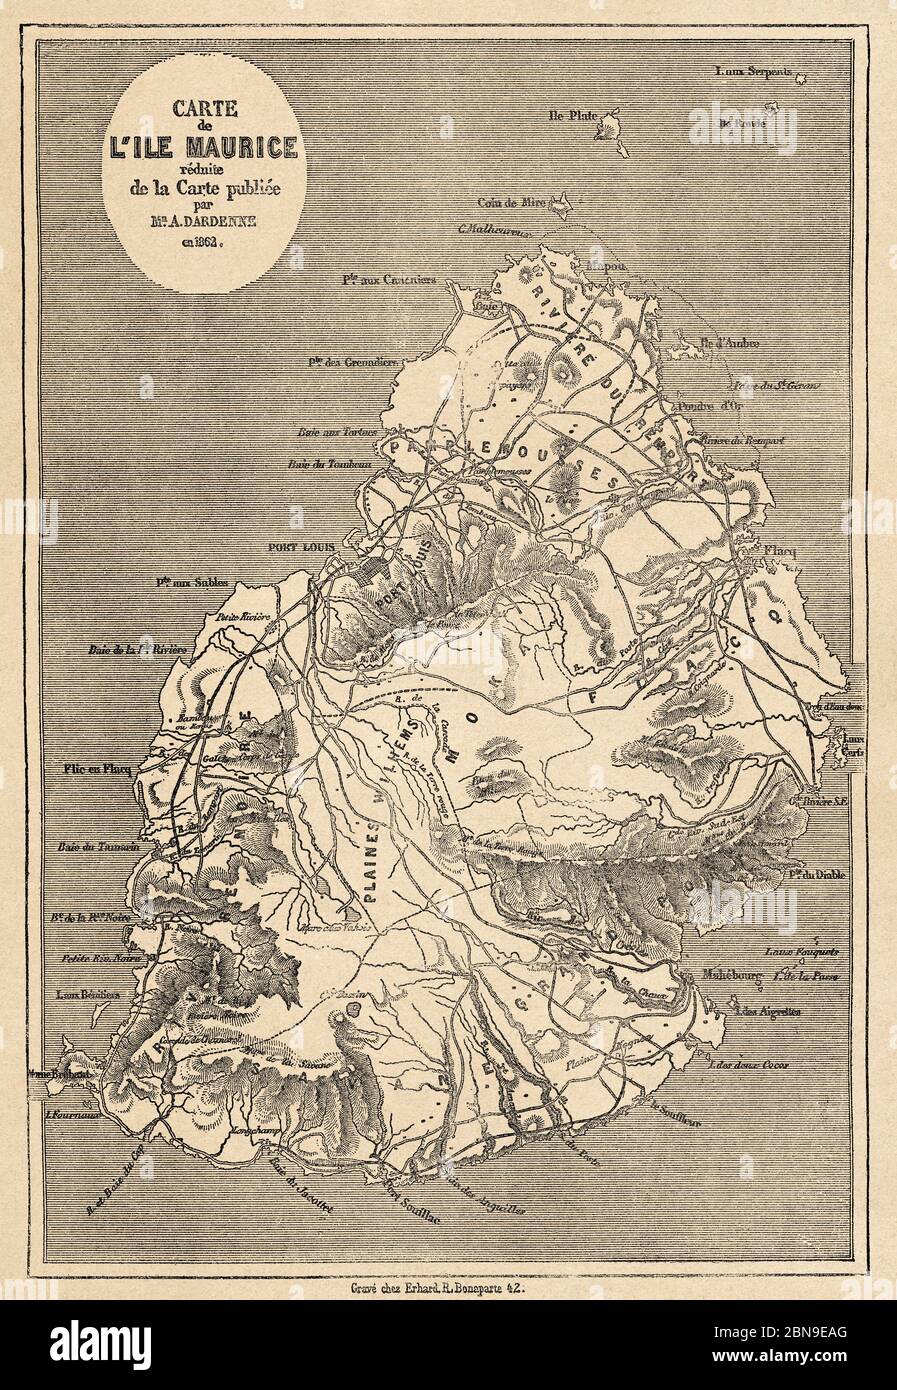 Old map of Mauritius Island. Mascarene Islands South Africa, Old 19th century engraved illustration, Le Tour du Monde 1863 Stock Photo